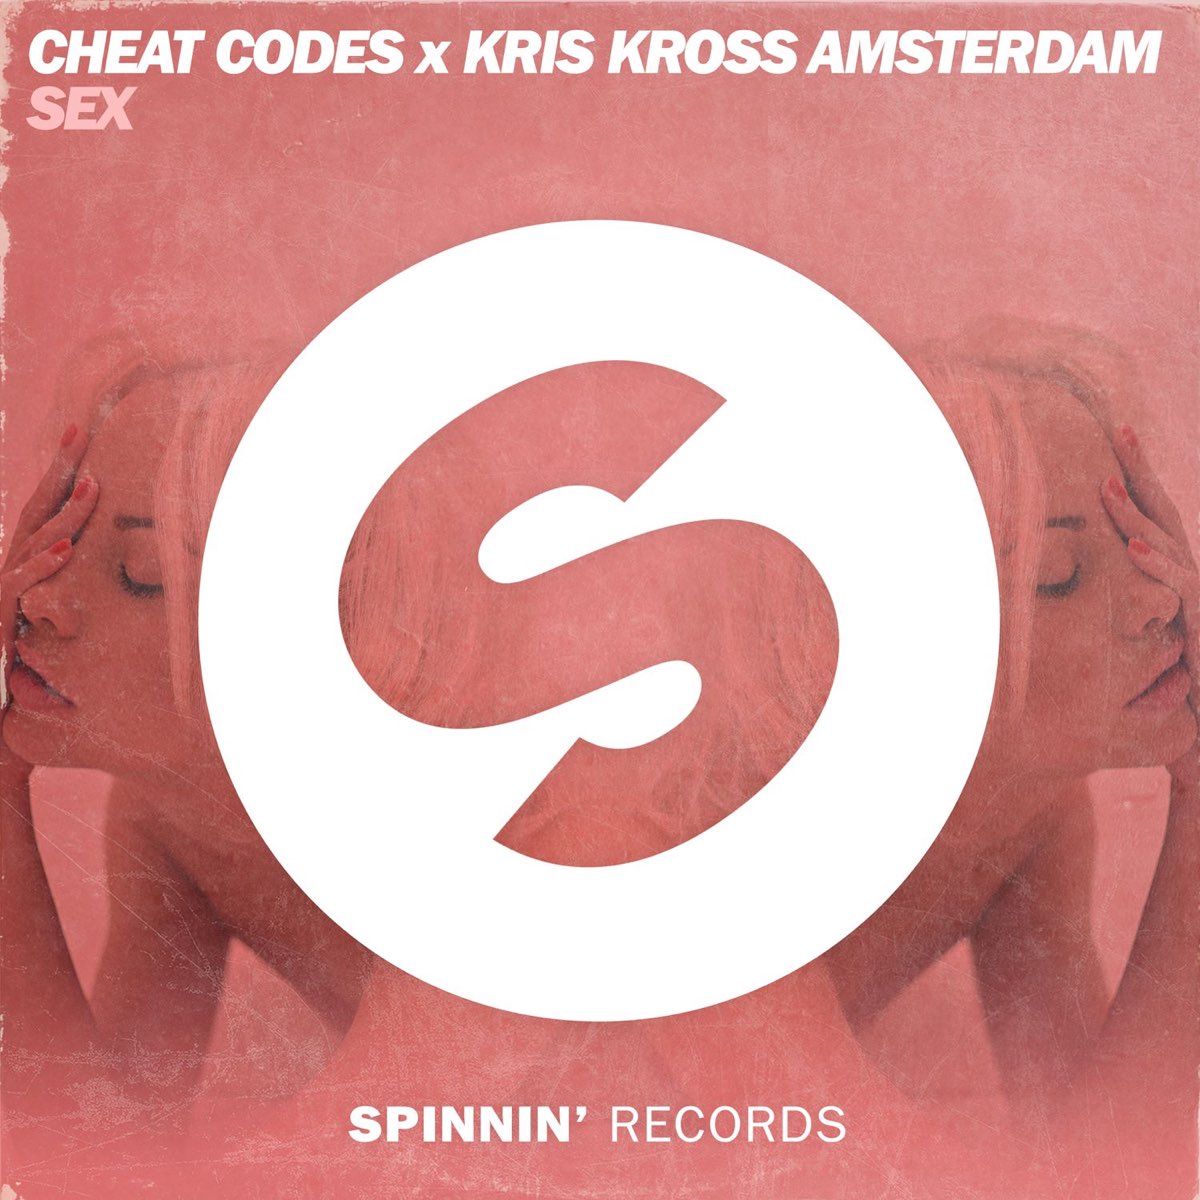 Sex (Extended Mix) - Single - Album by Cheat Codes & Kris Kross Amsterdam -  Apple Music